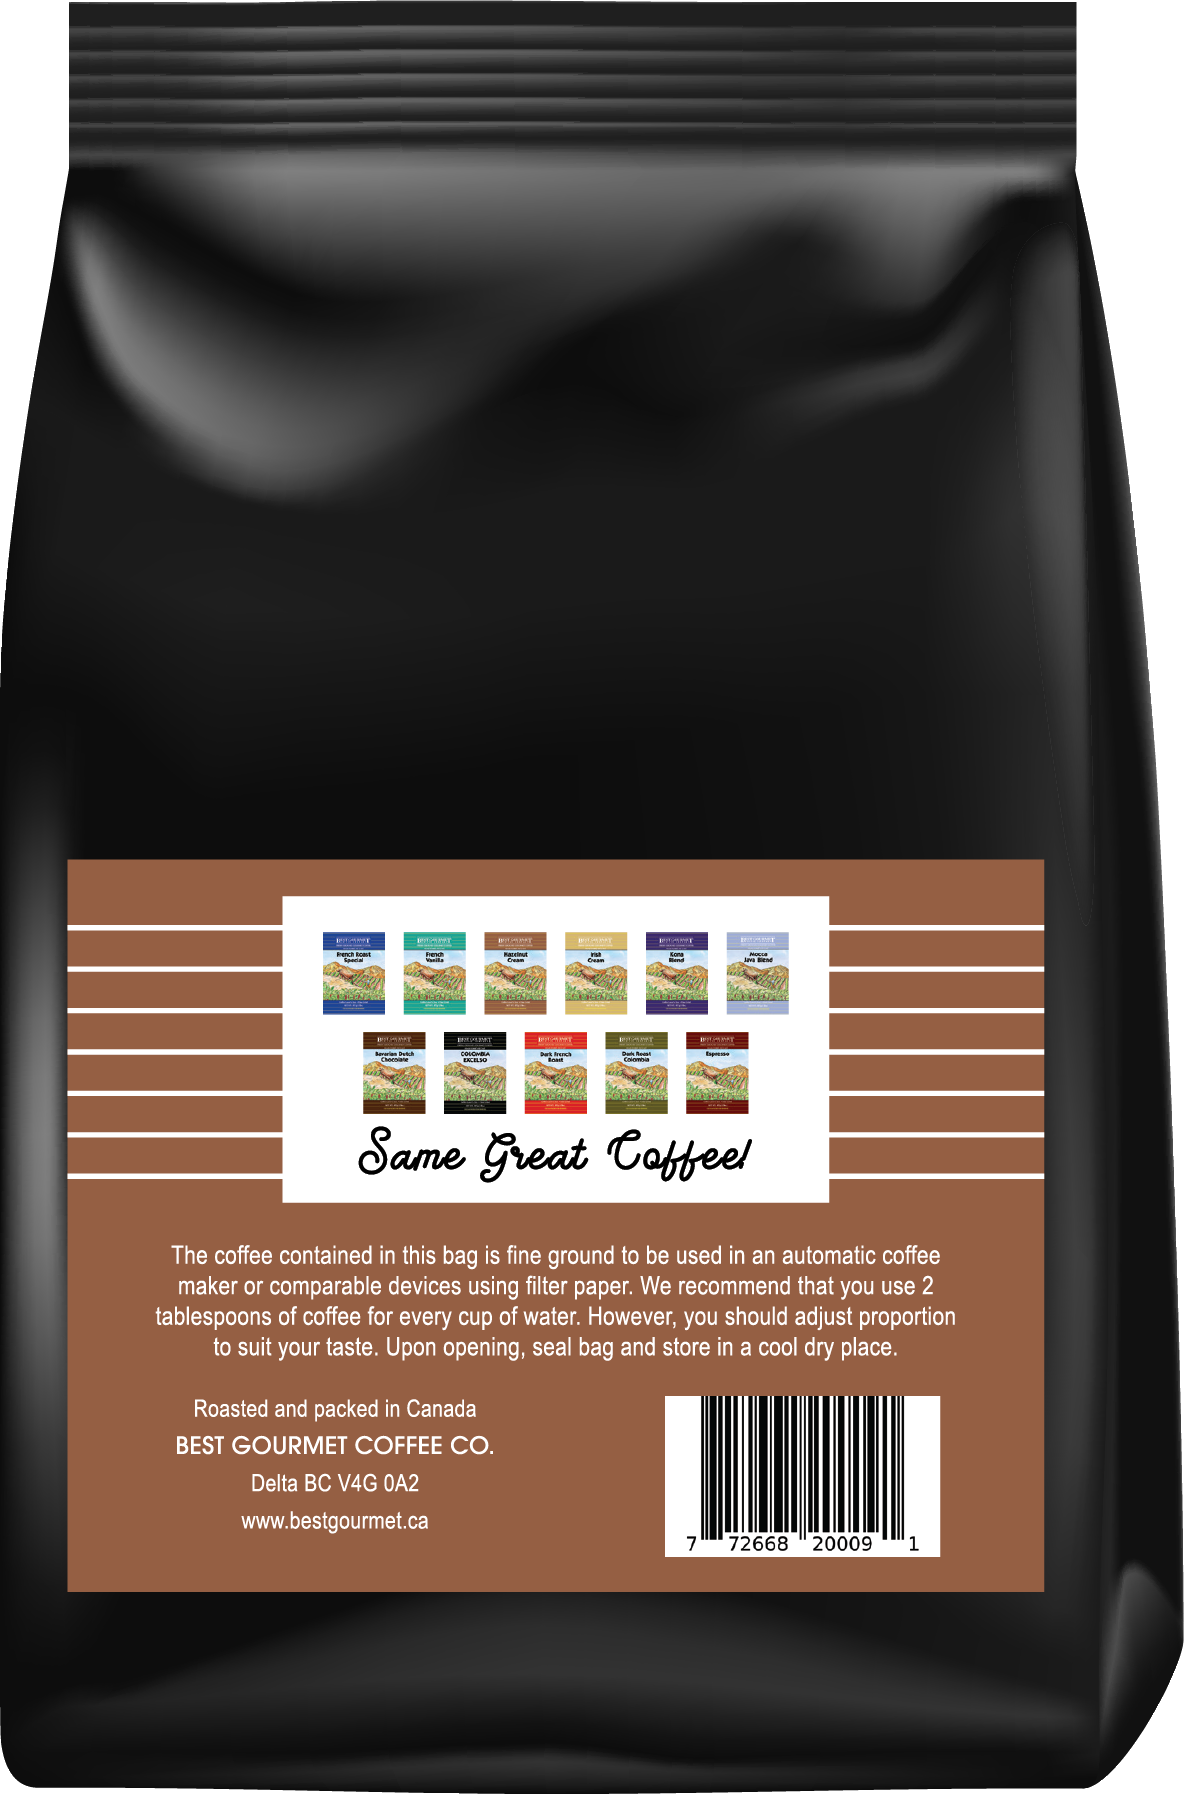 Hazelnut Cream Coffee -2lb-907g Ground Coffee - Drip Grind - Medium Roast